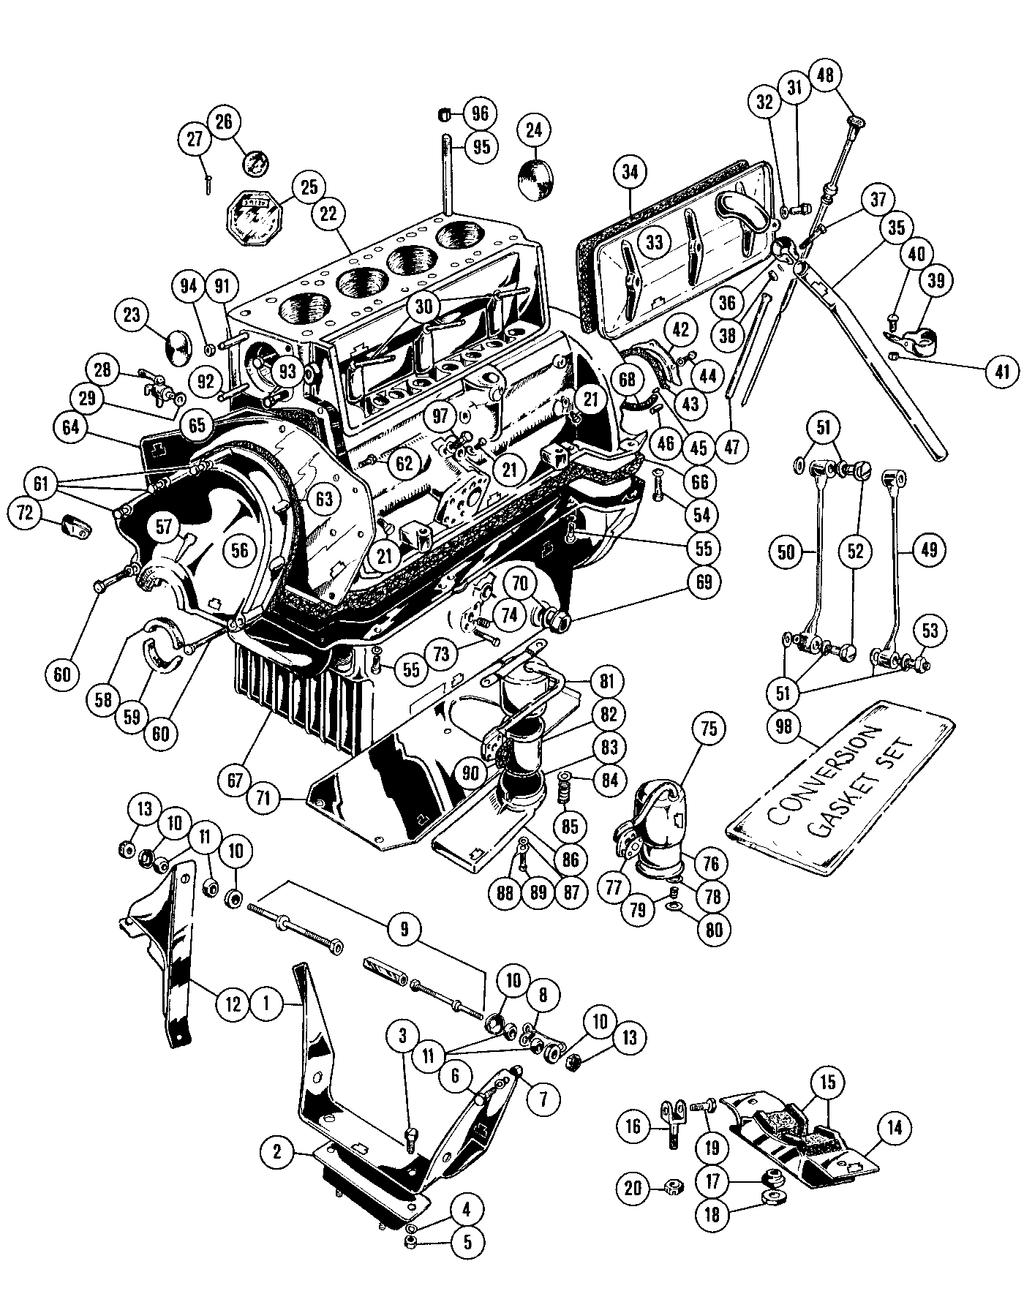 MGTD-TF 1949-1955 - Engine block & parts - Engine - 1